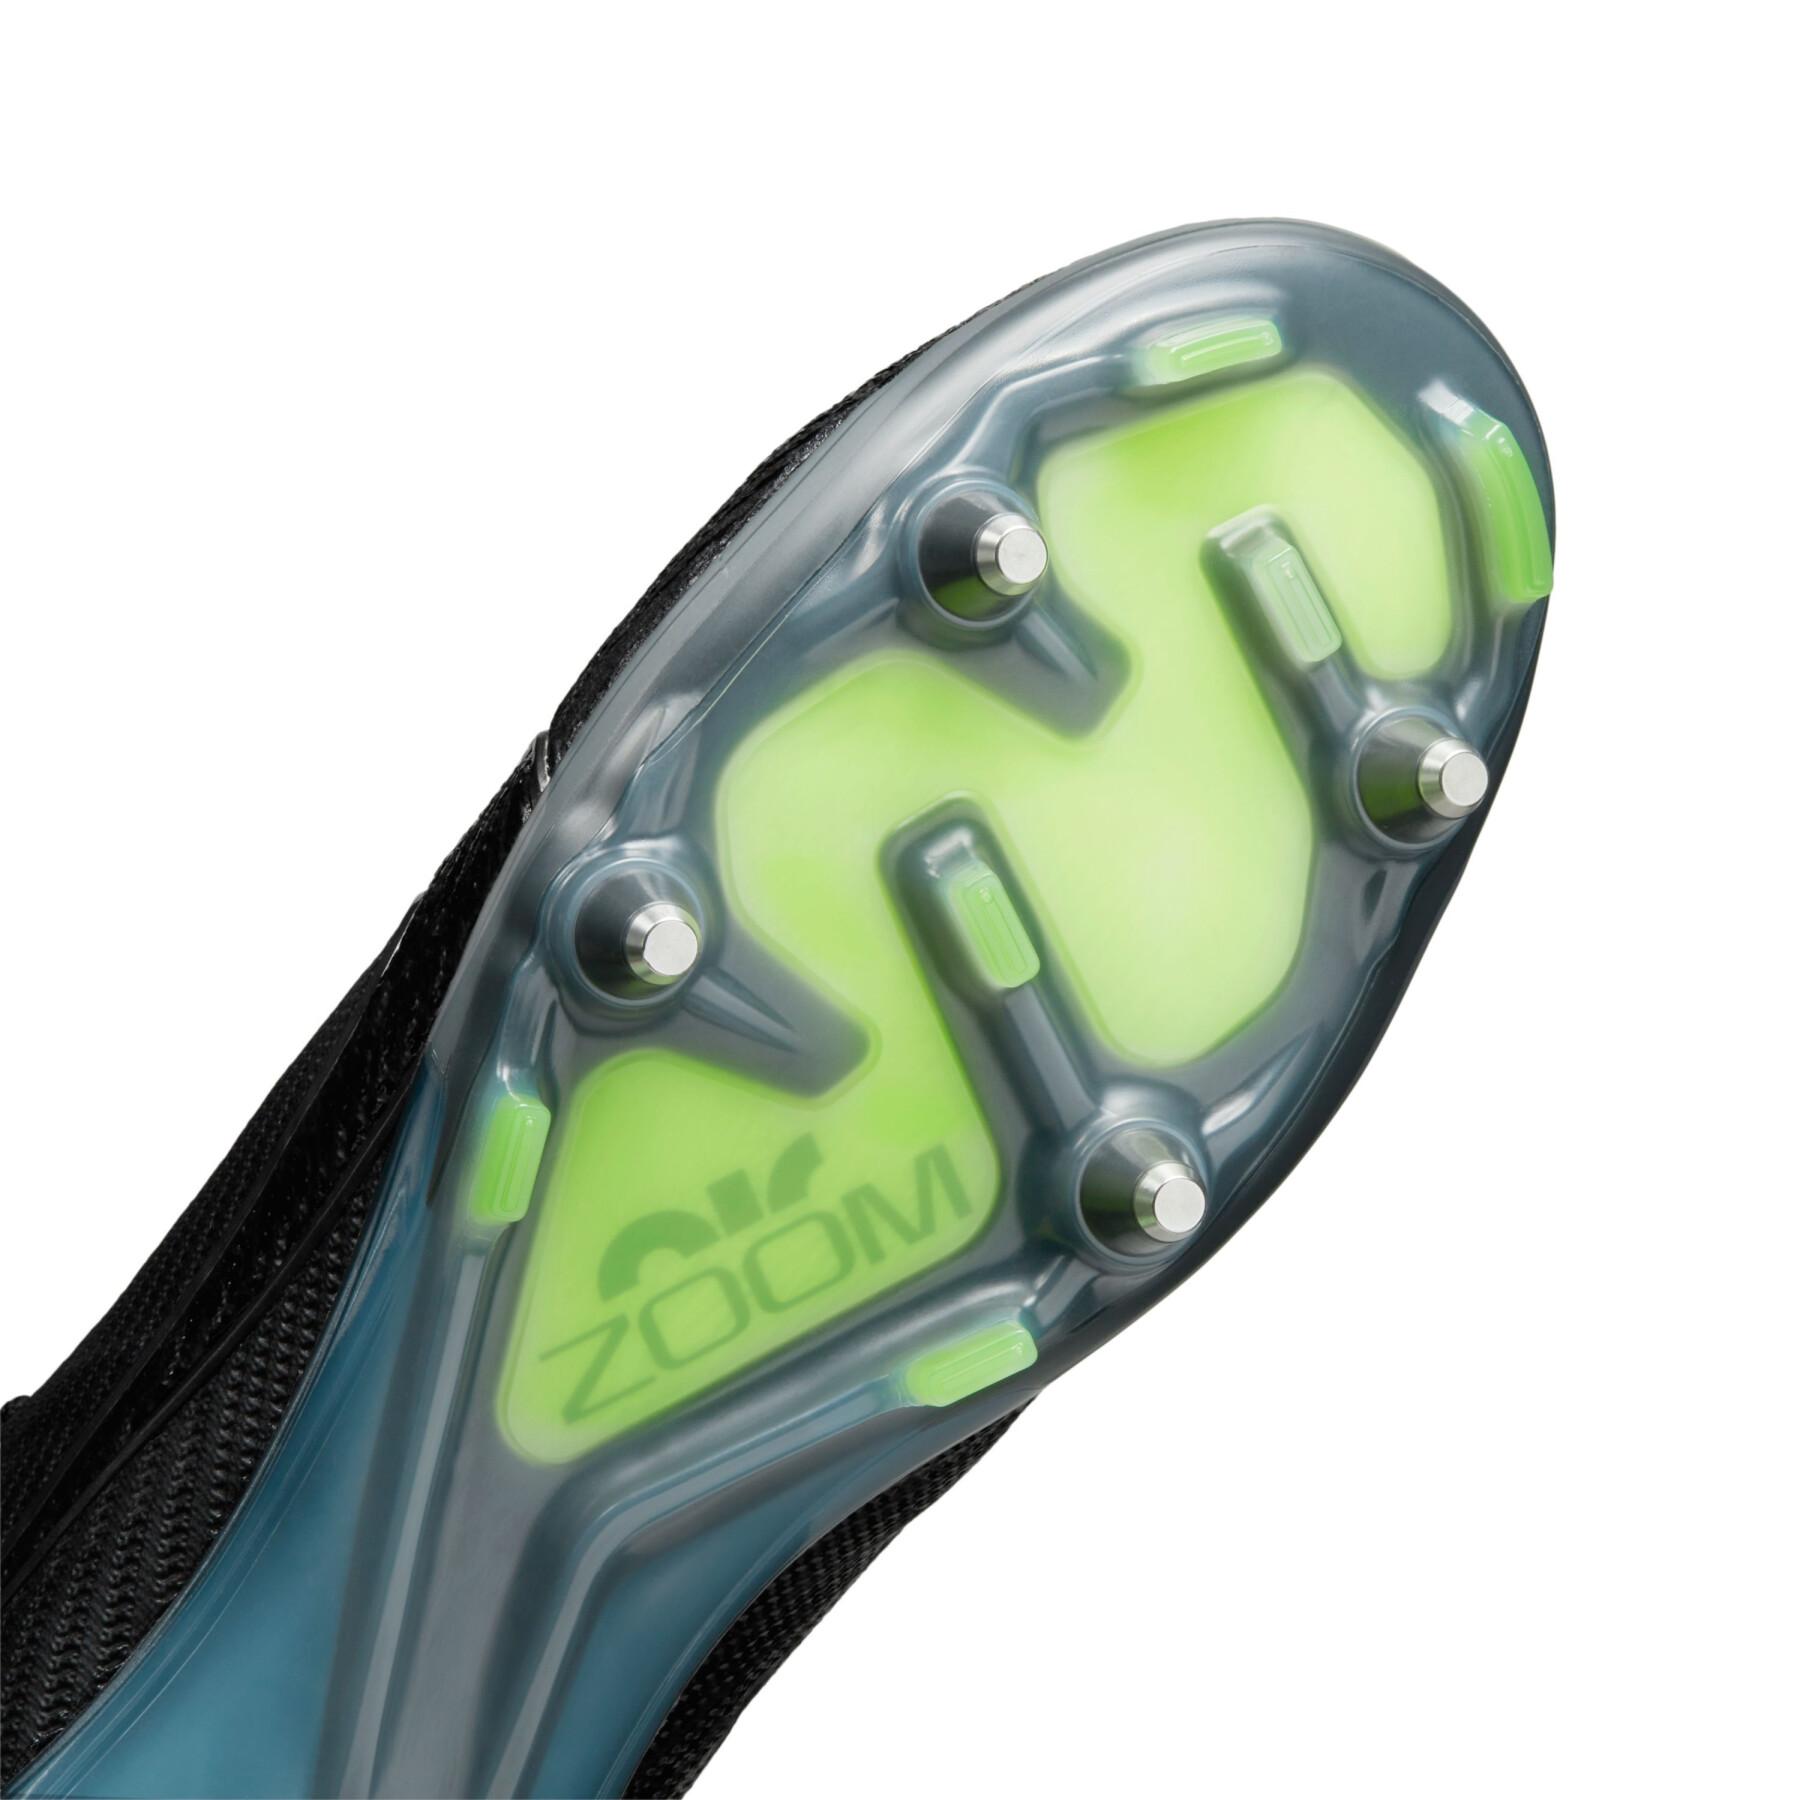 Chaussures de football Nike Zoom Mercurial Superfly 9 Elite SG-Pro - Shadow Black Pack